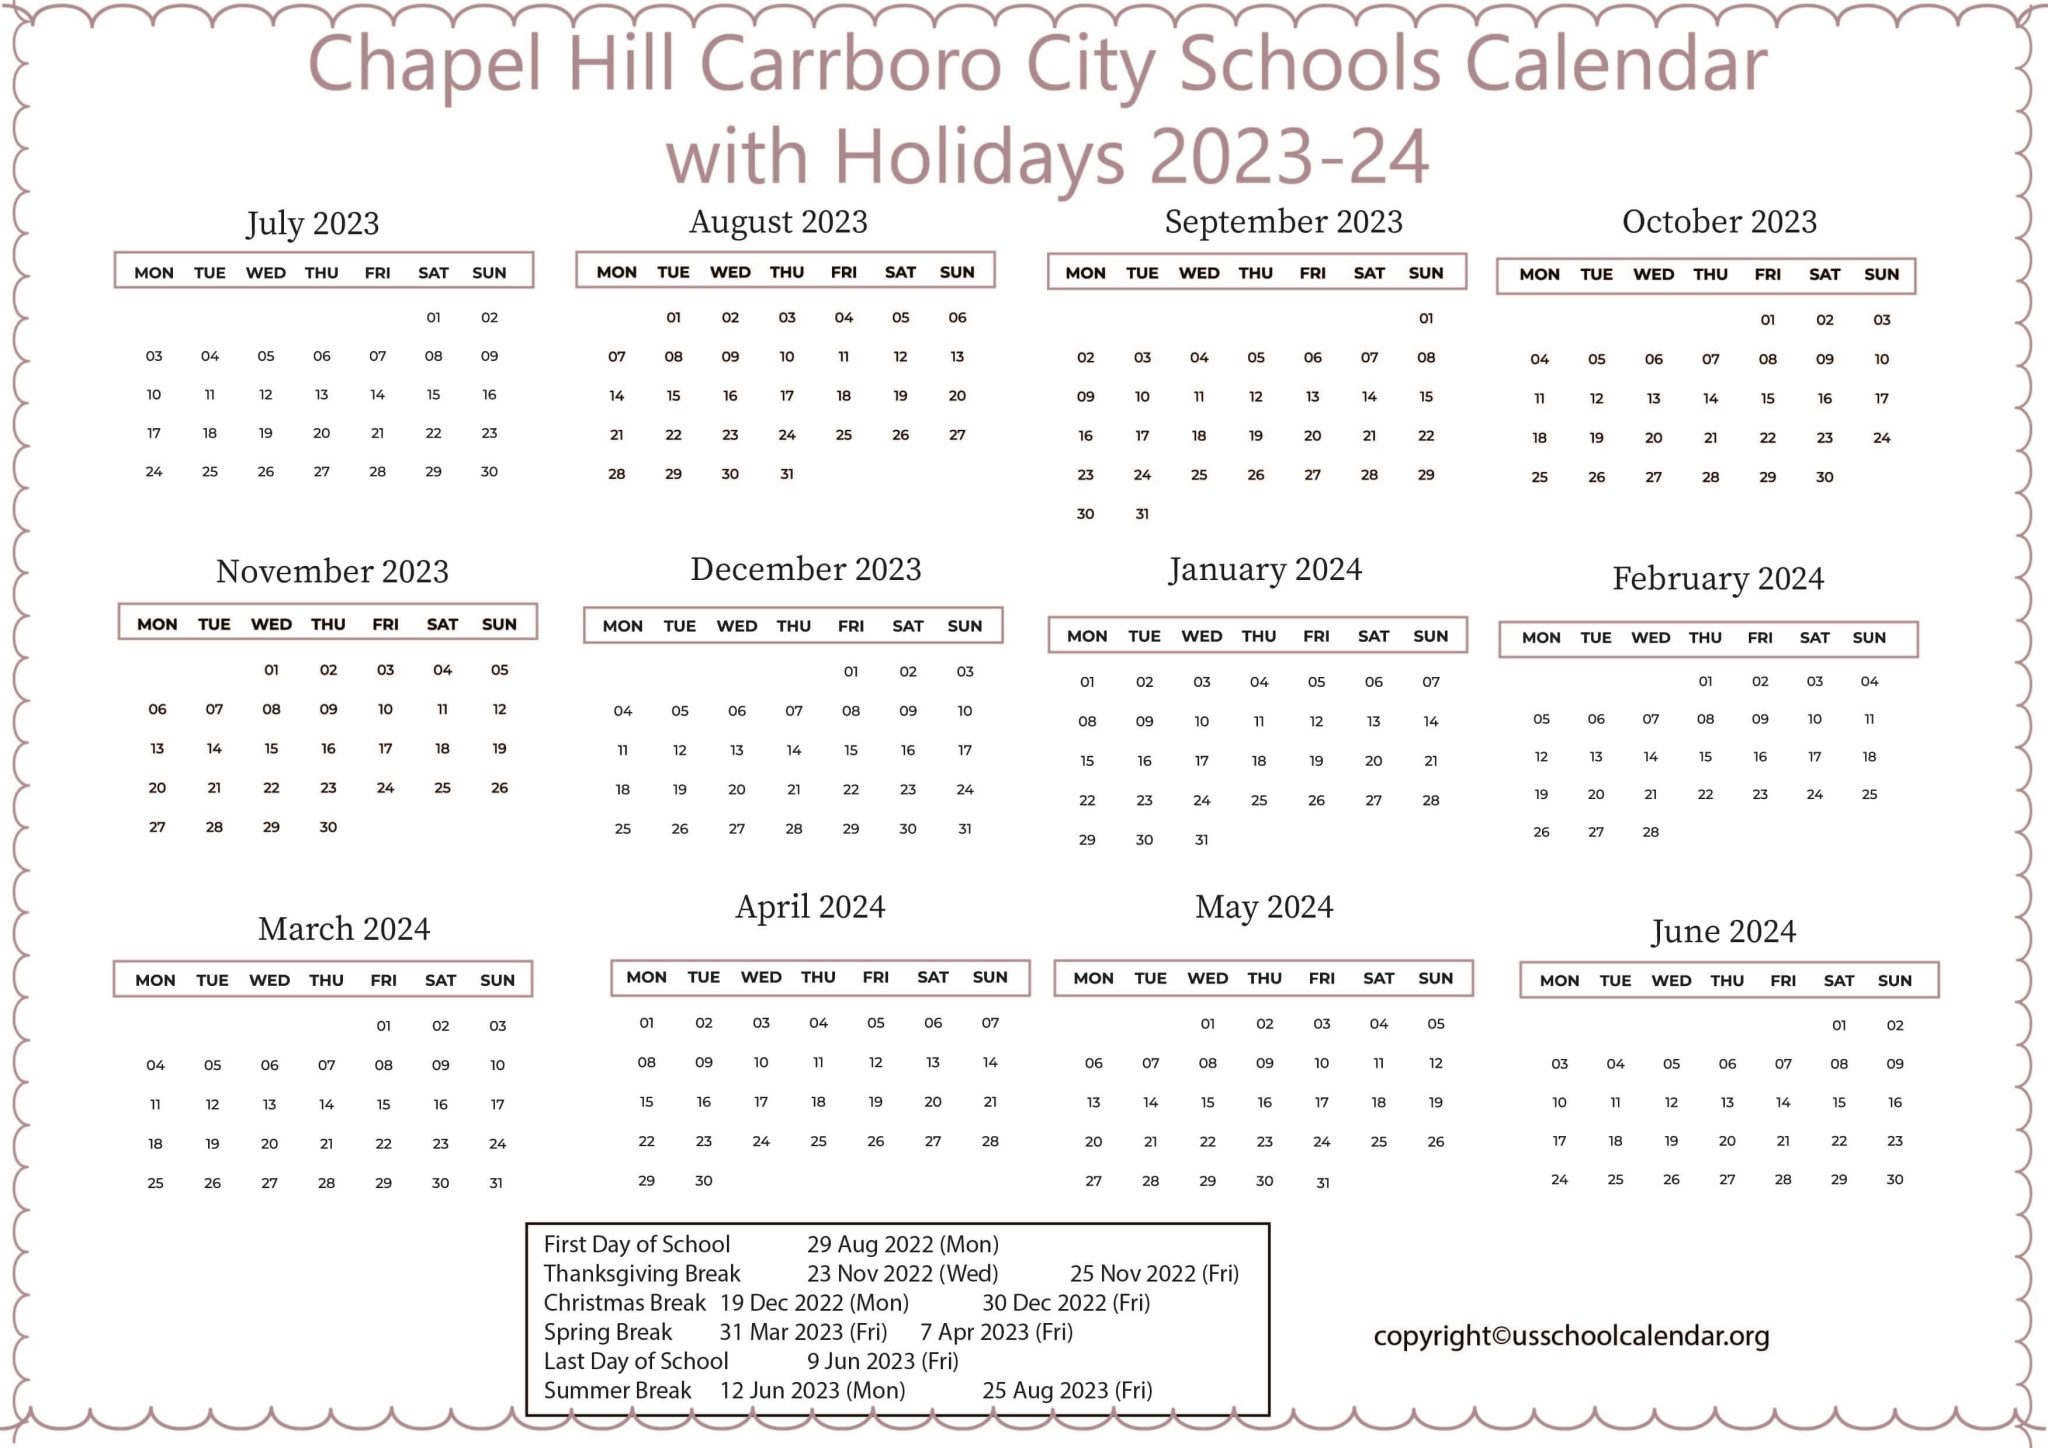 CHCCS Calendar US School Calendar